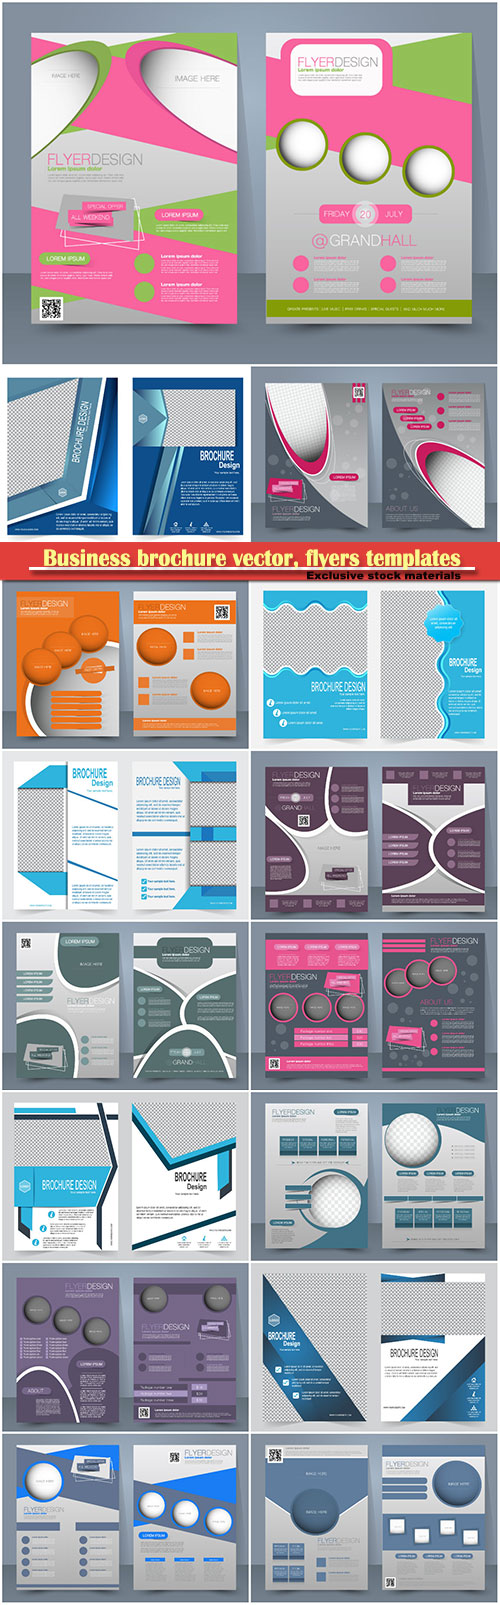 Business brochure vector, flyers templates, report cover design # 95